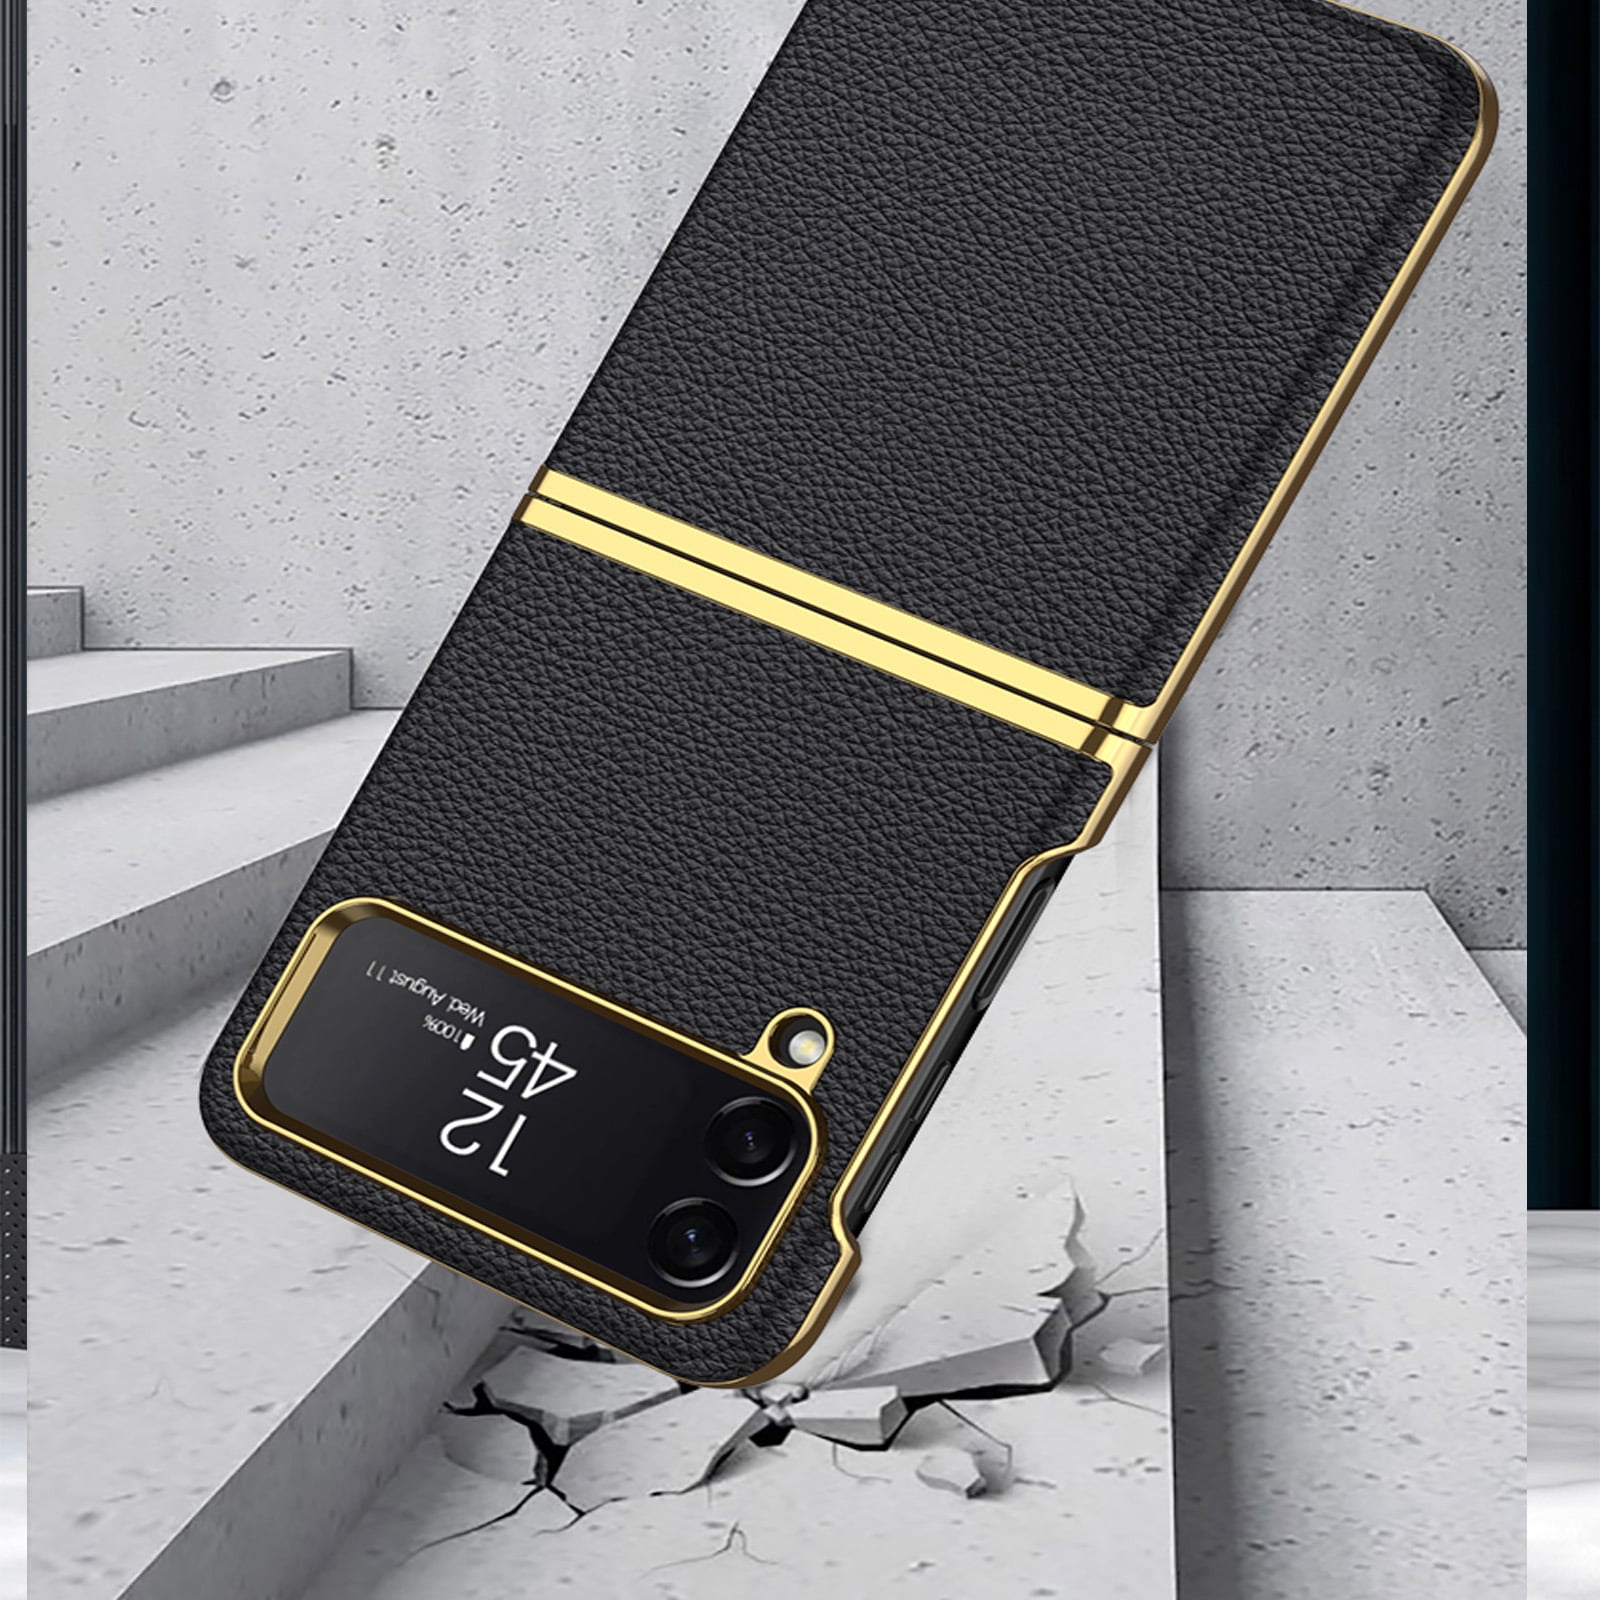  WOLLONY for Samsung Galaxy Z Flip 4 Case Luxury